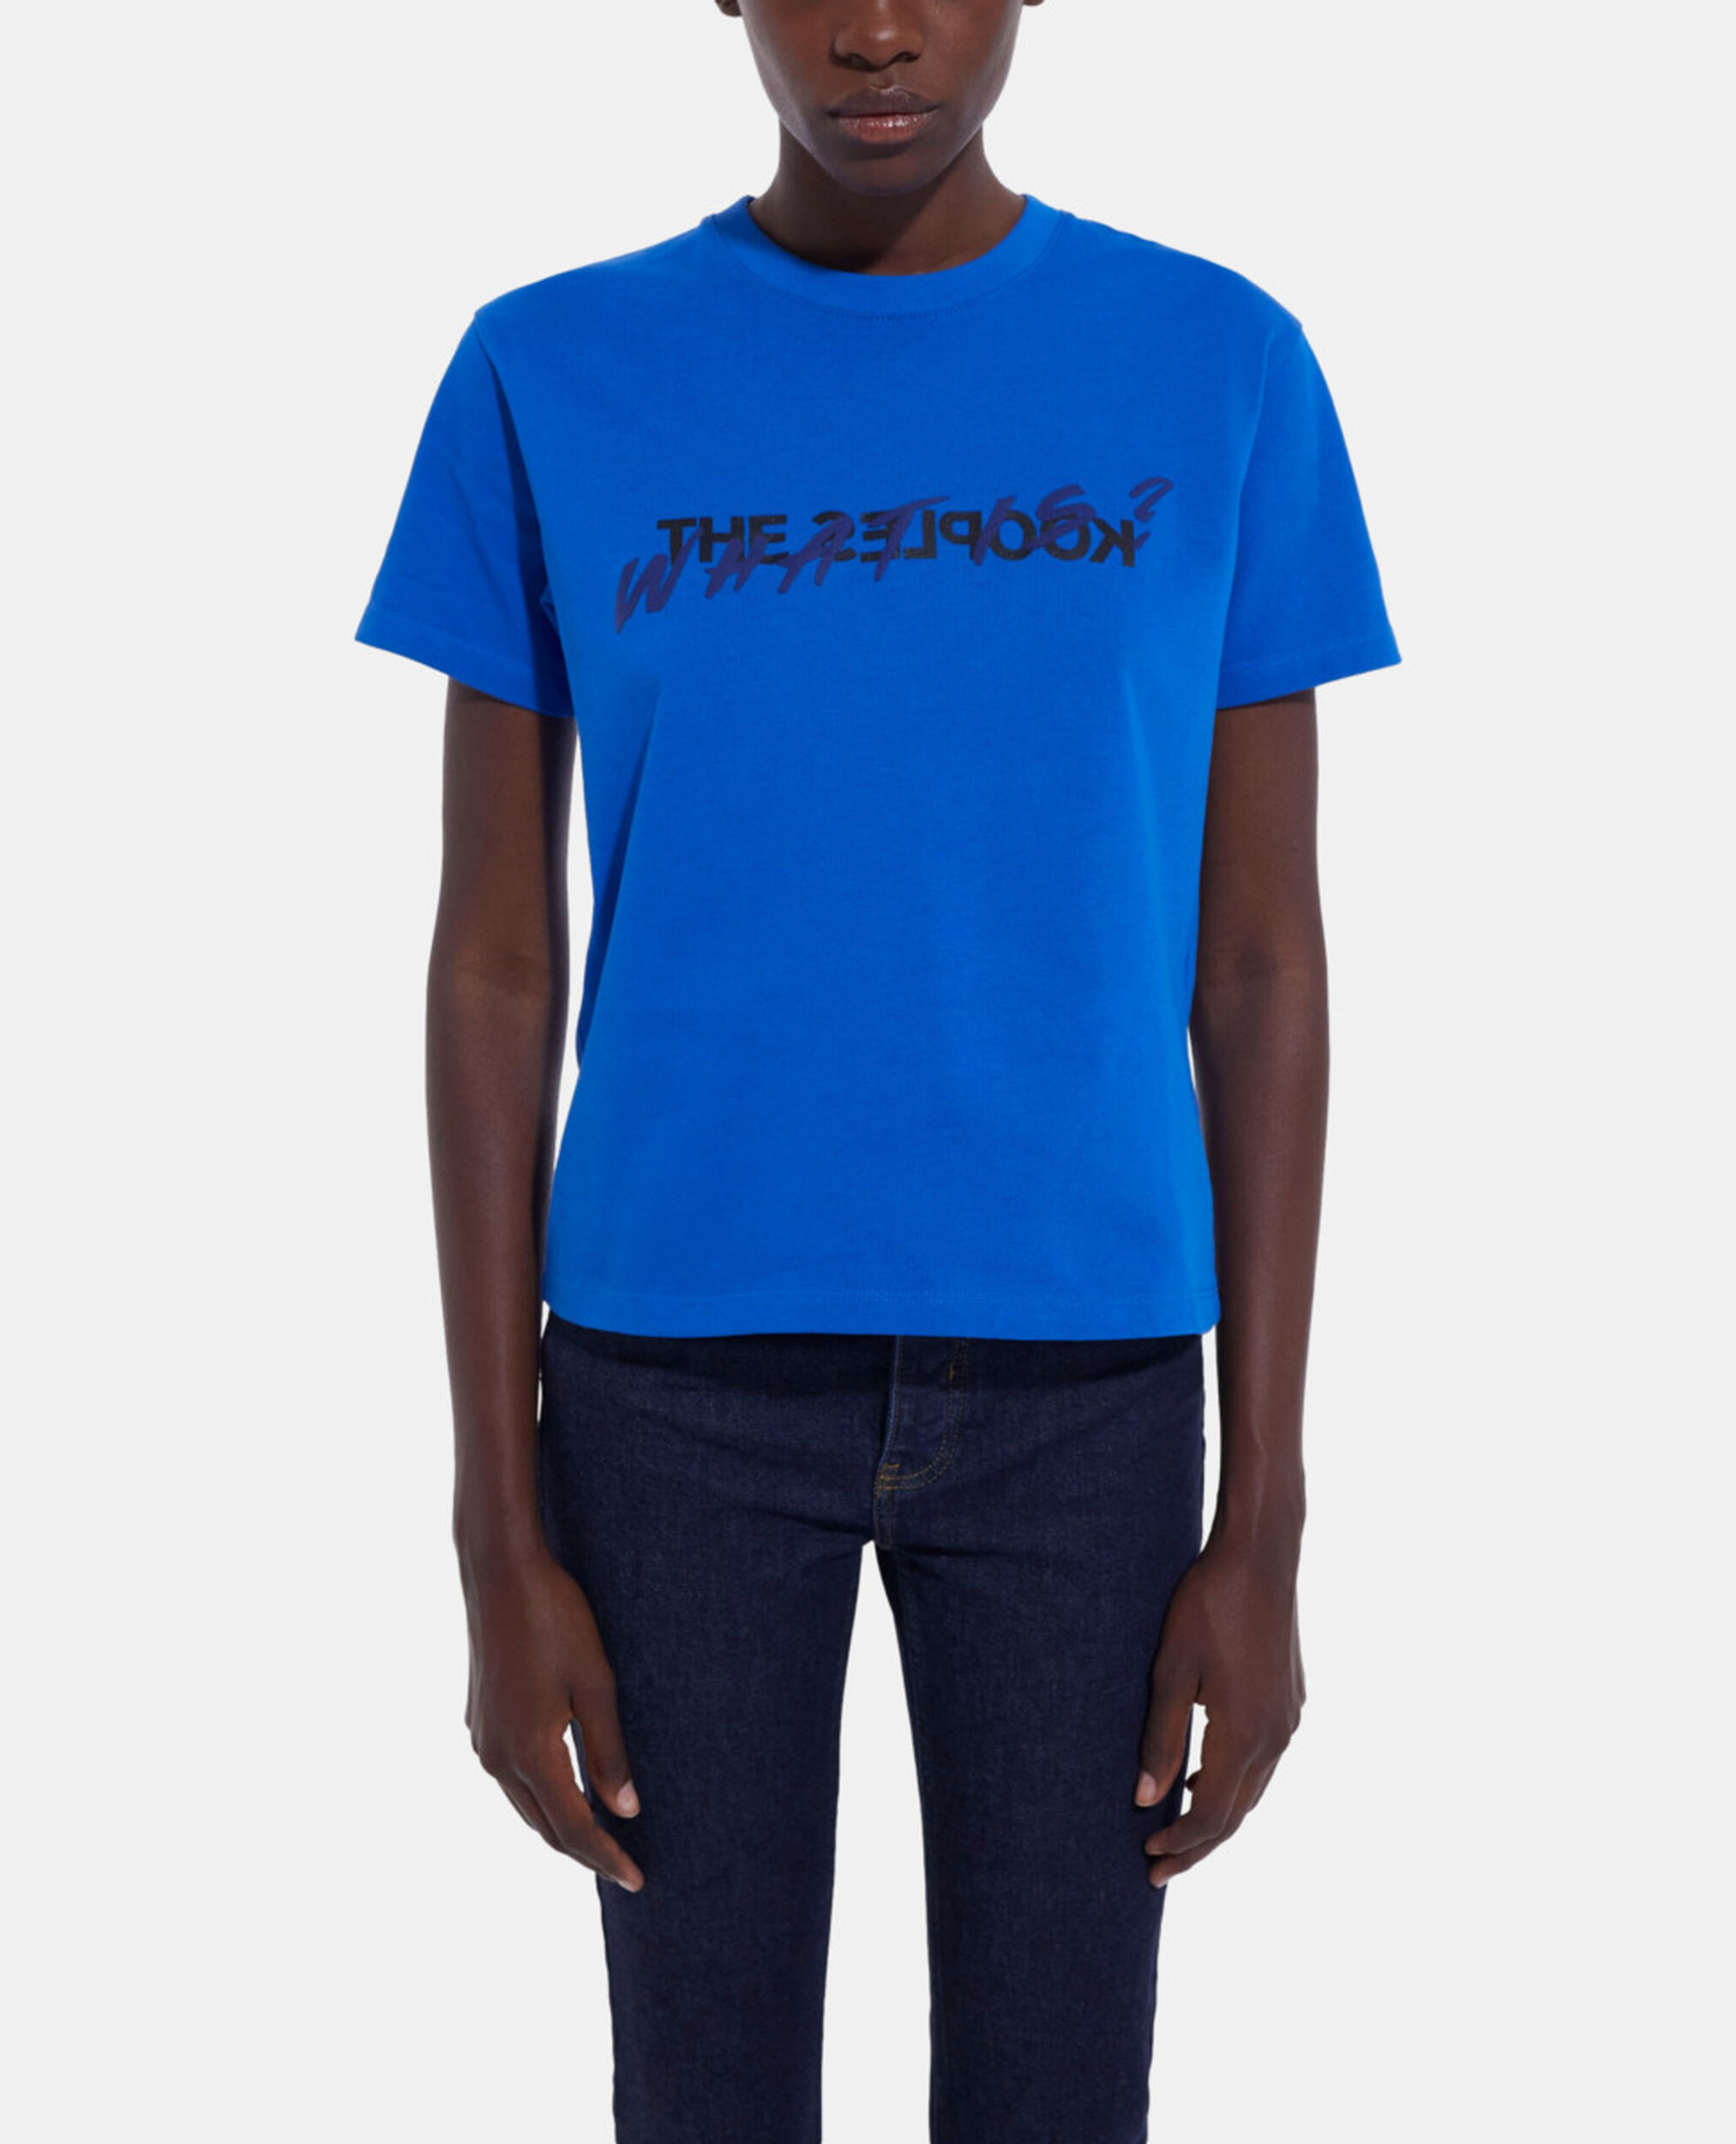 Blaues T-Shirt mit What is-Schriftzug, INK BLUE, hi-res image number null